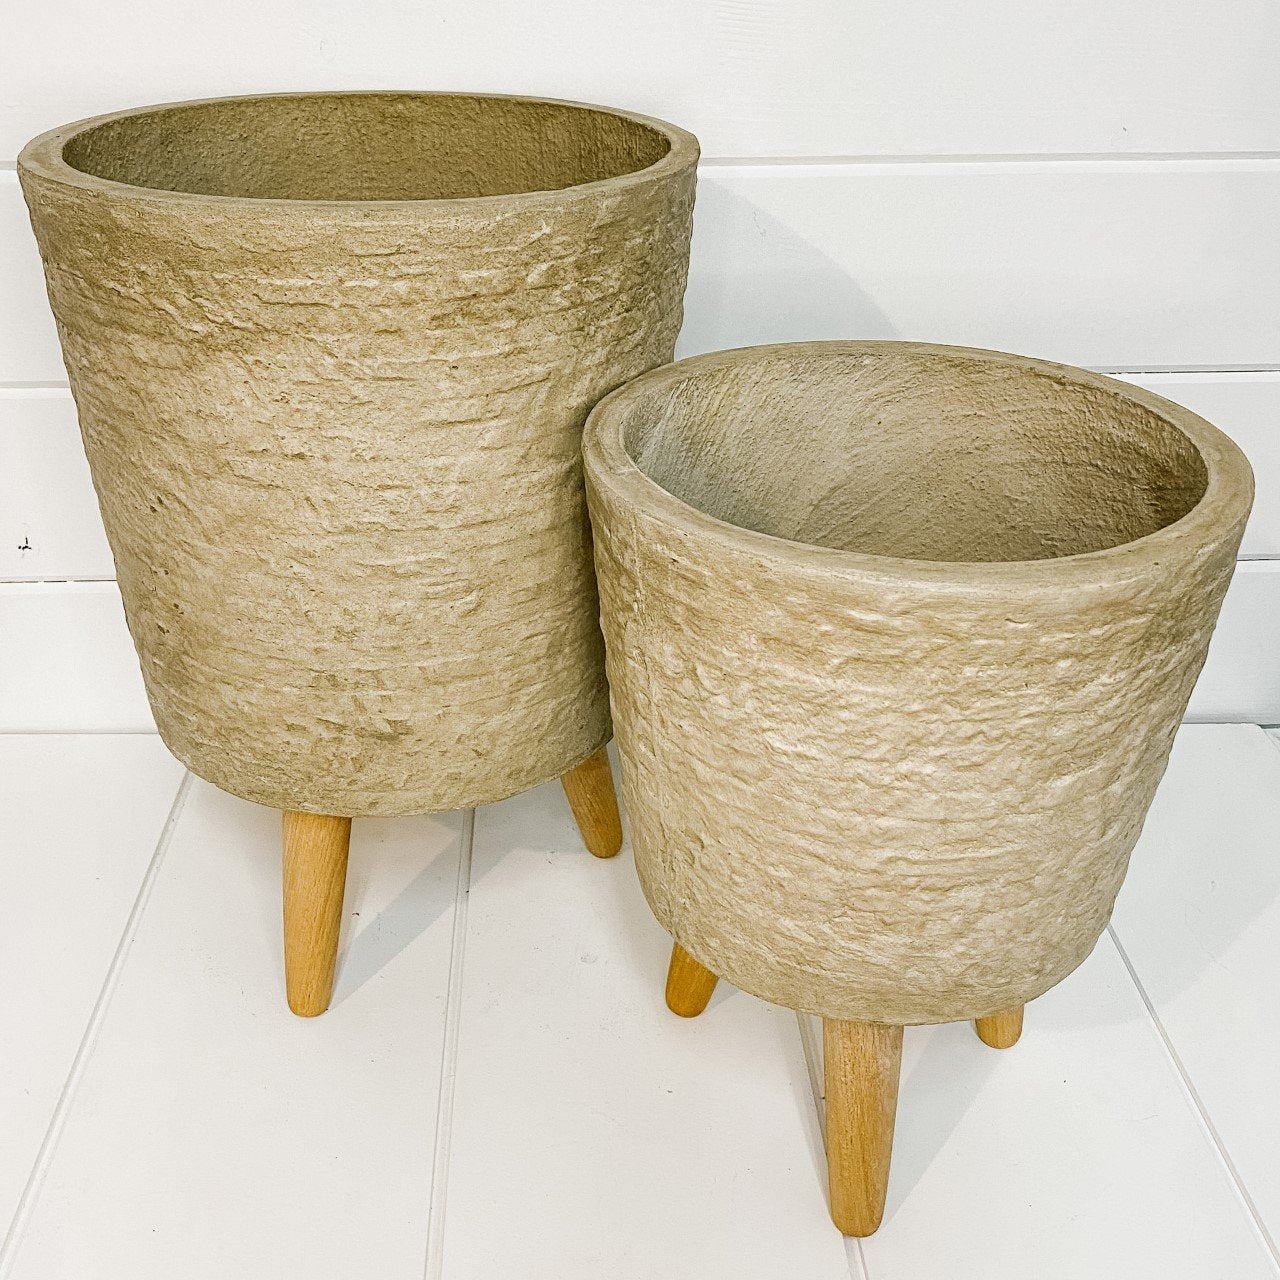 Beige Textured Fibreclay Plant Pot on Wooden Legs